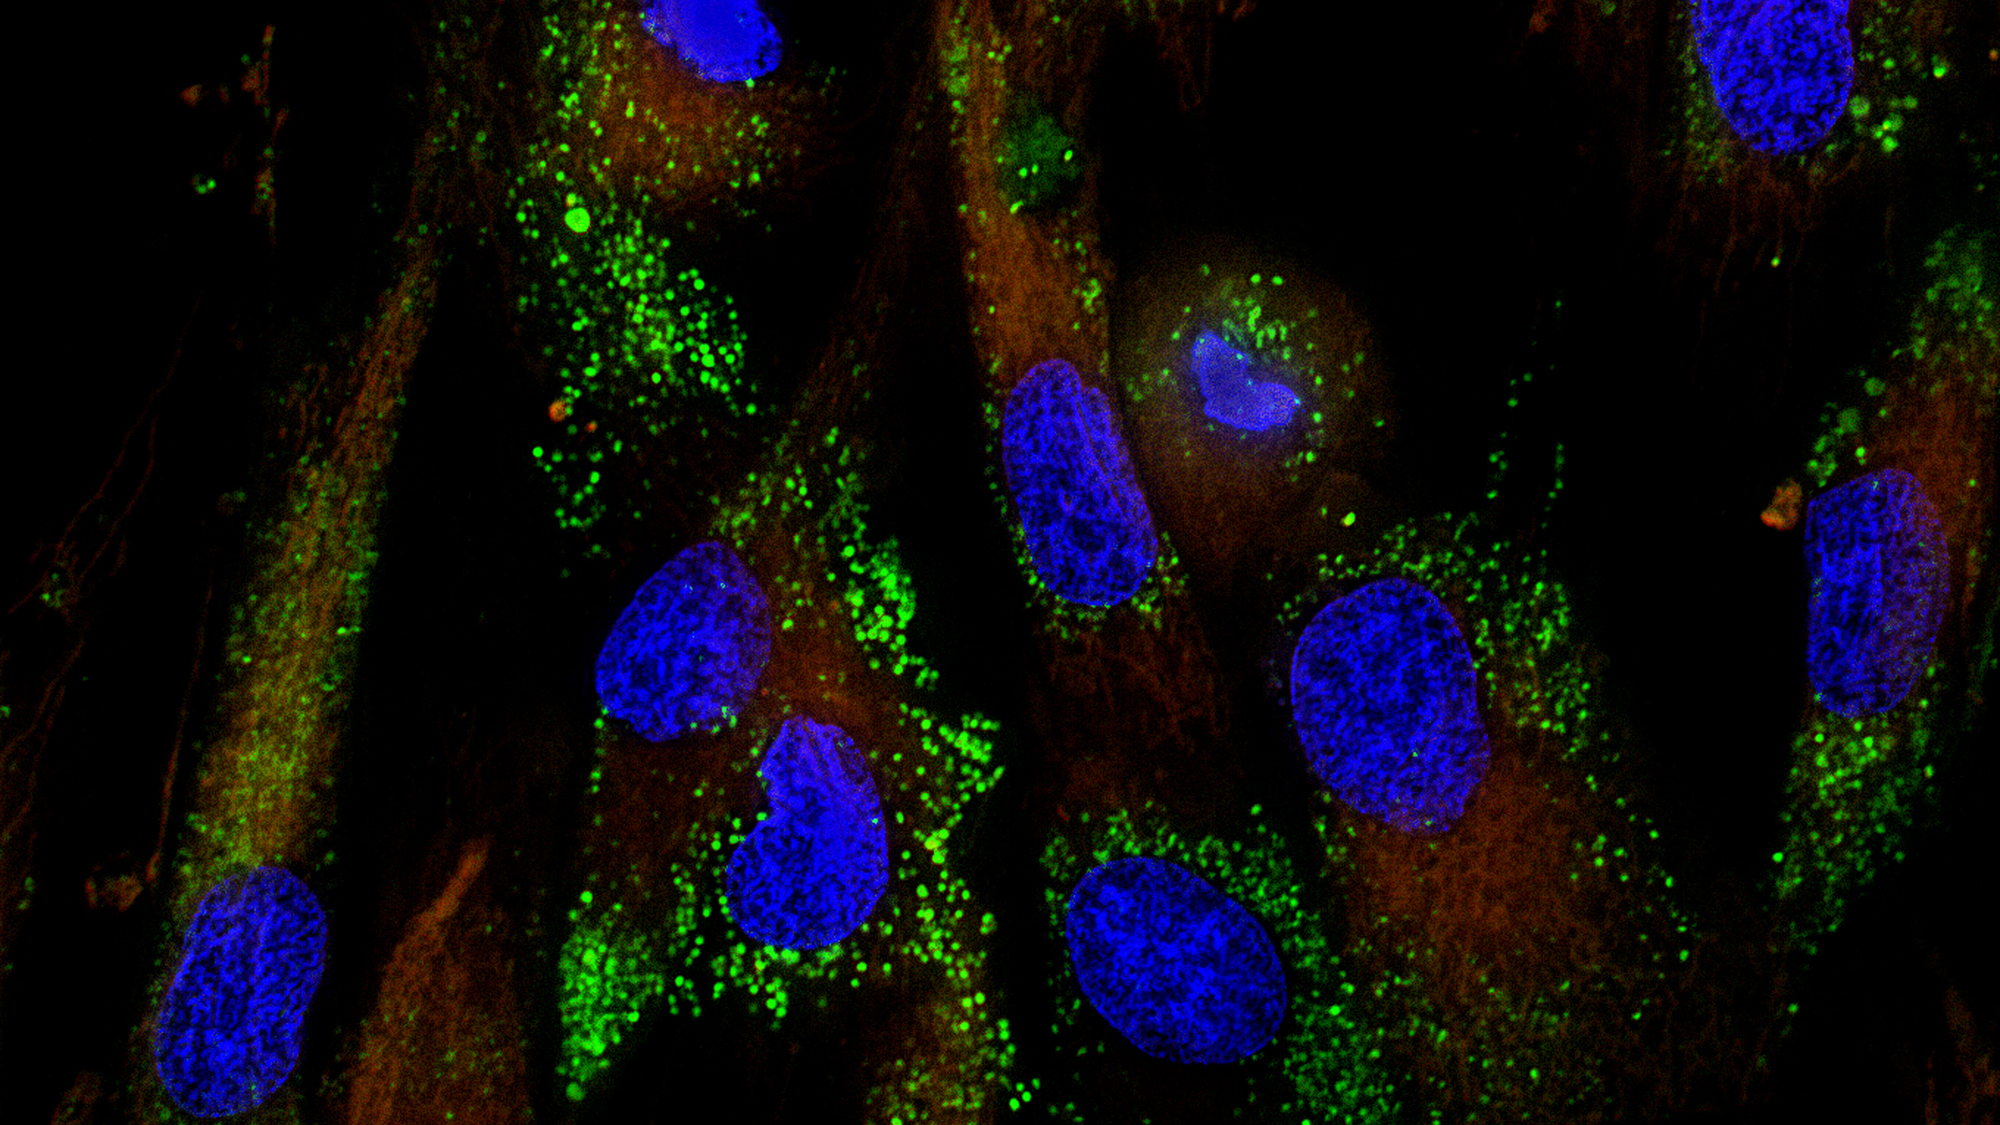 Stem cells seen through fluorescence microscope